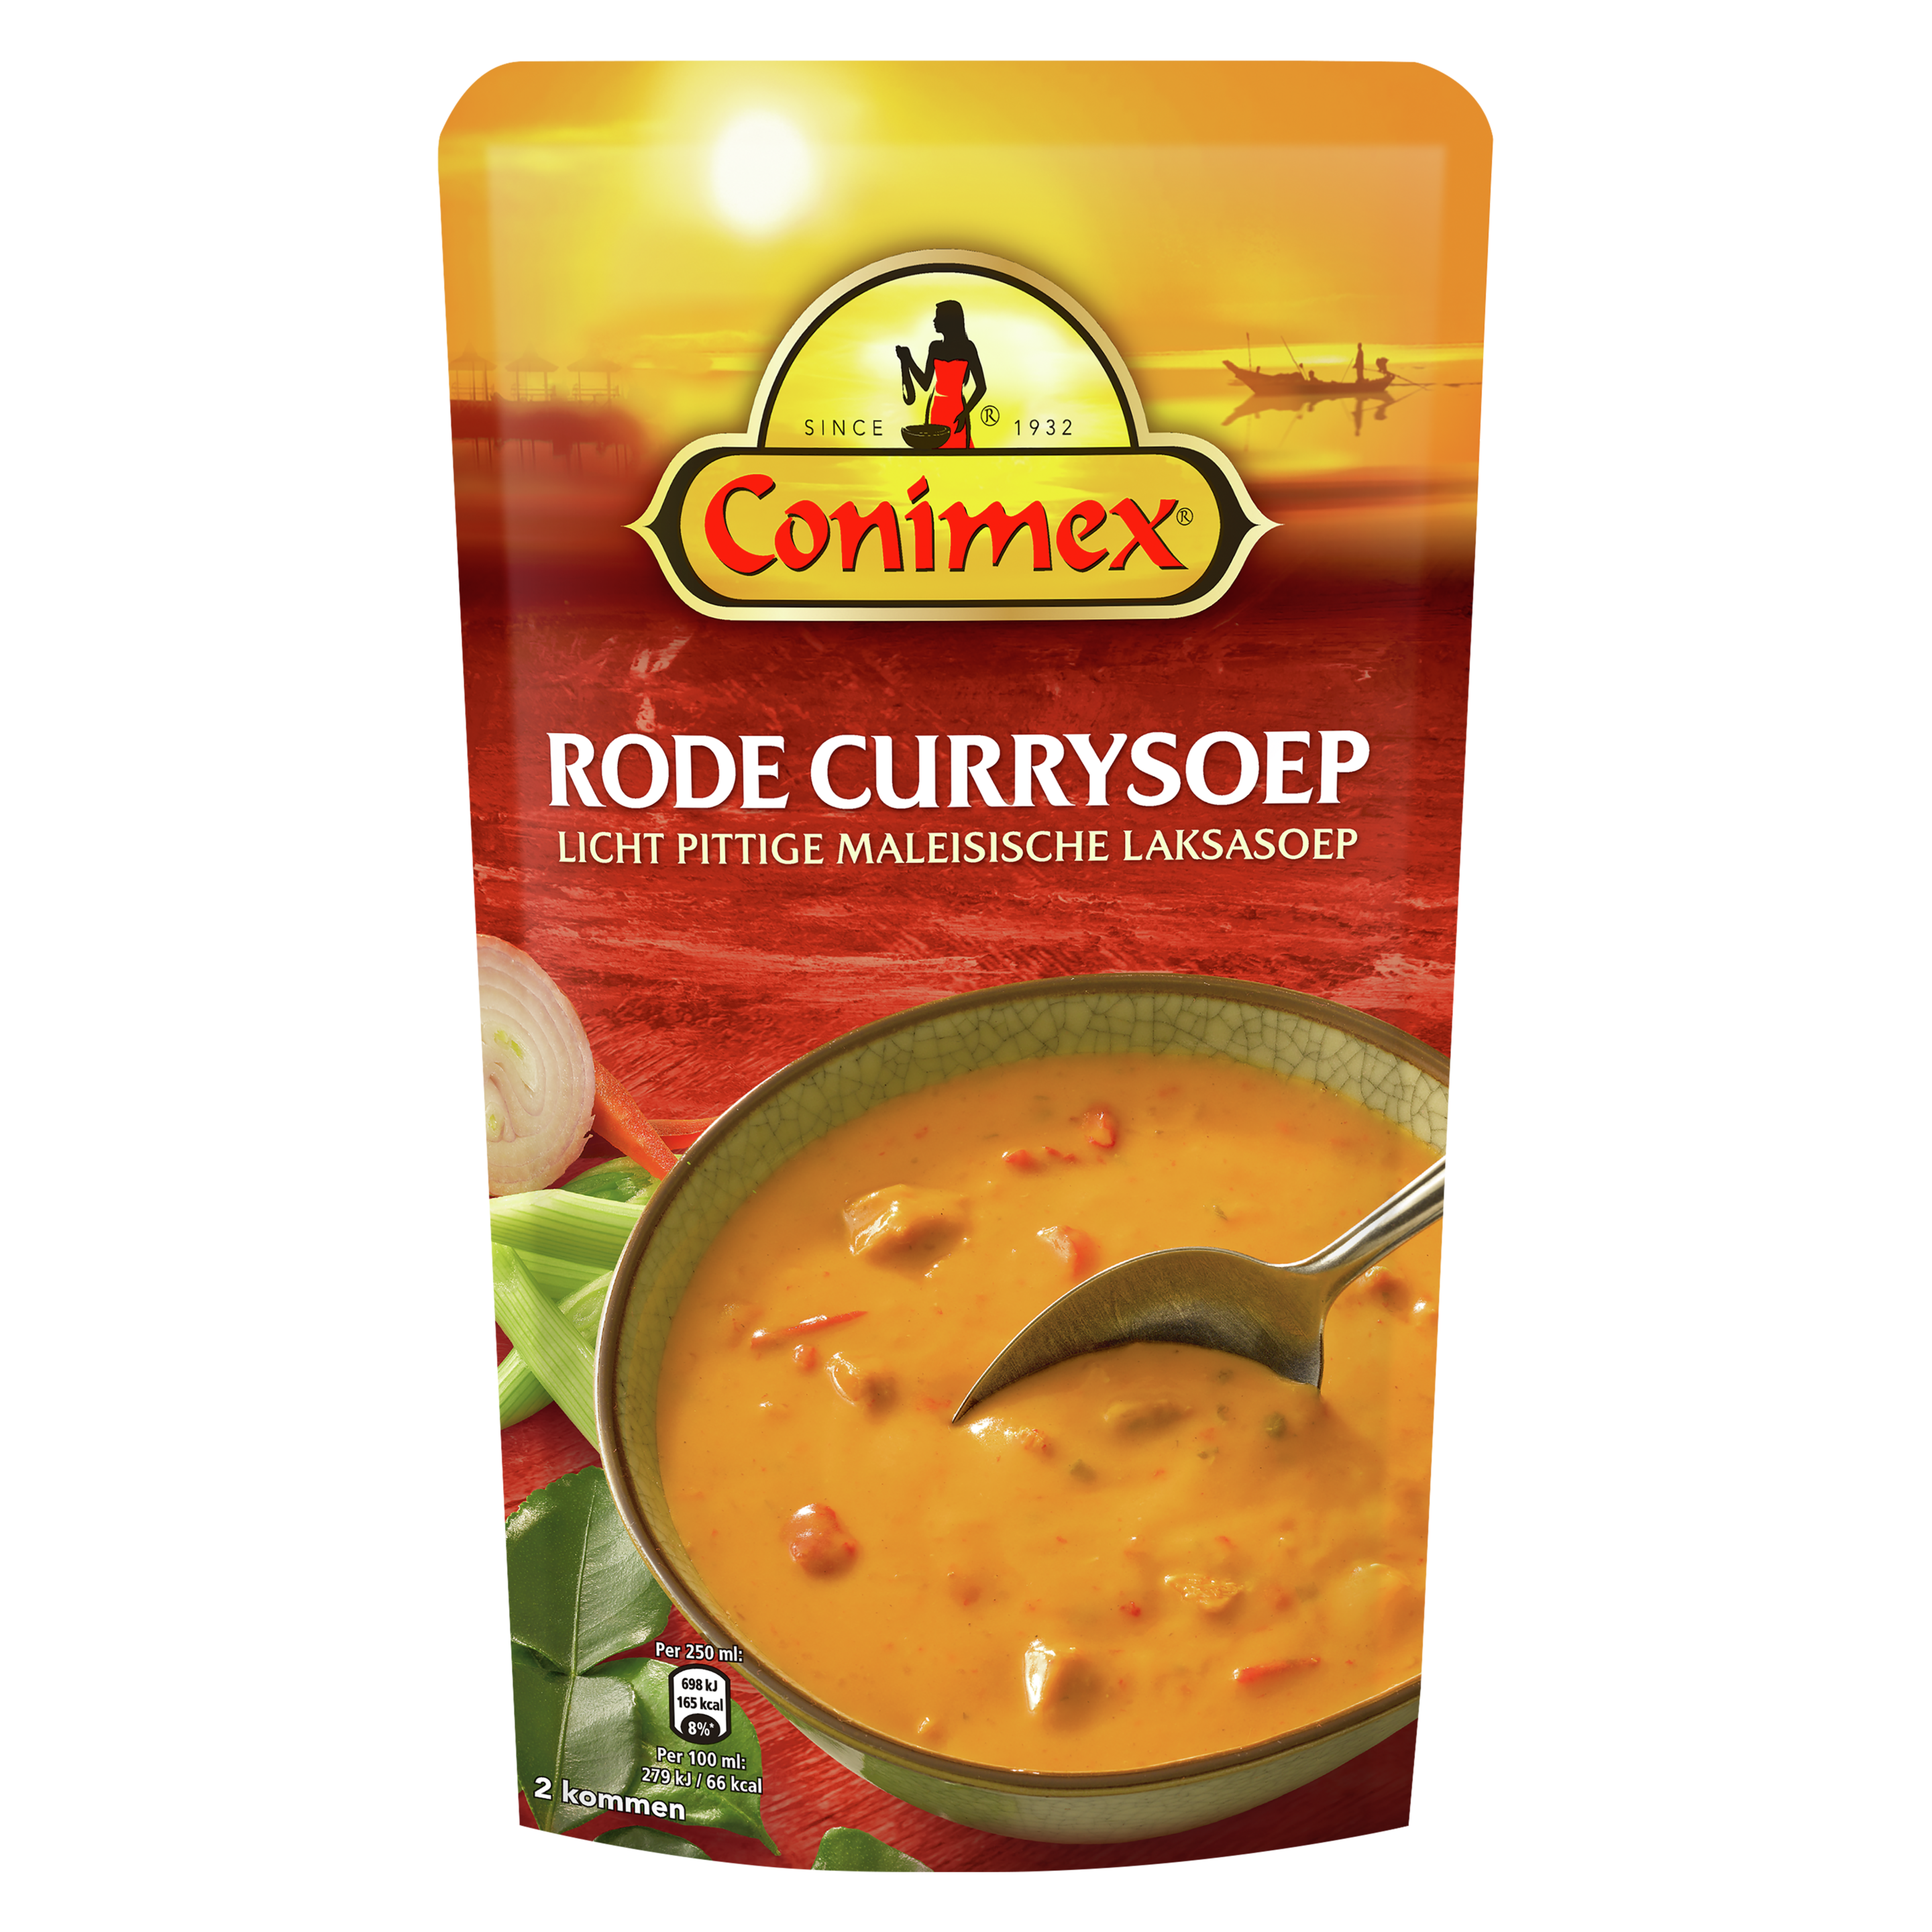 Rode Currysoep